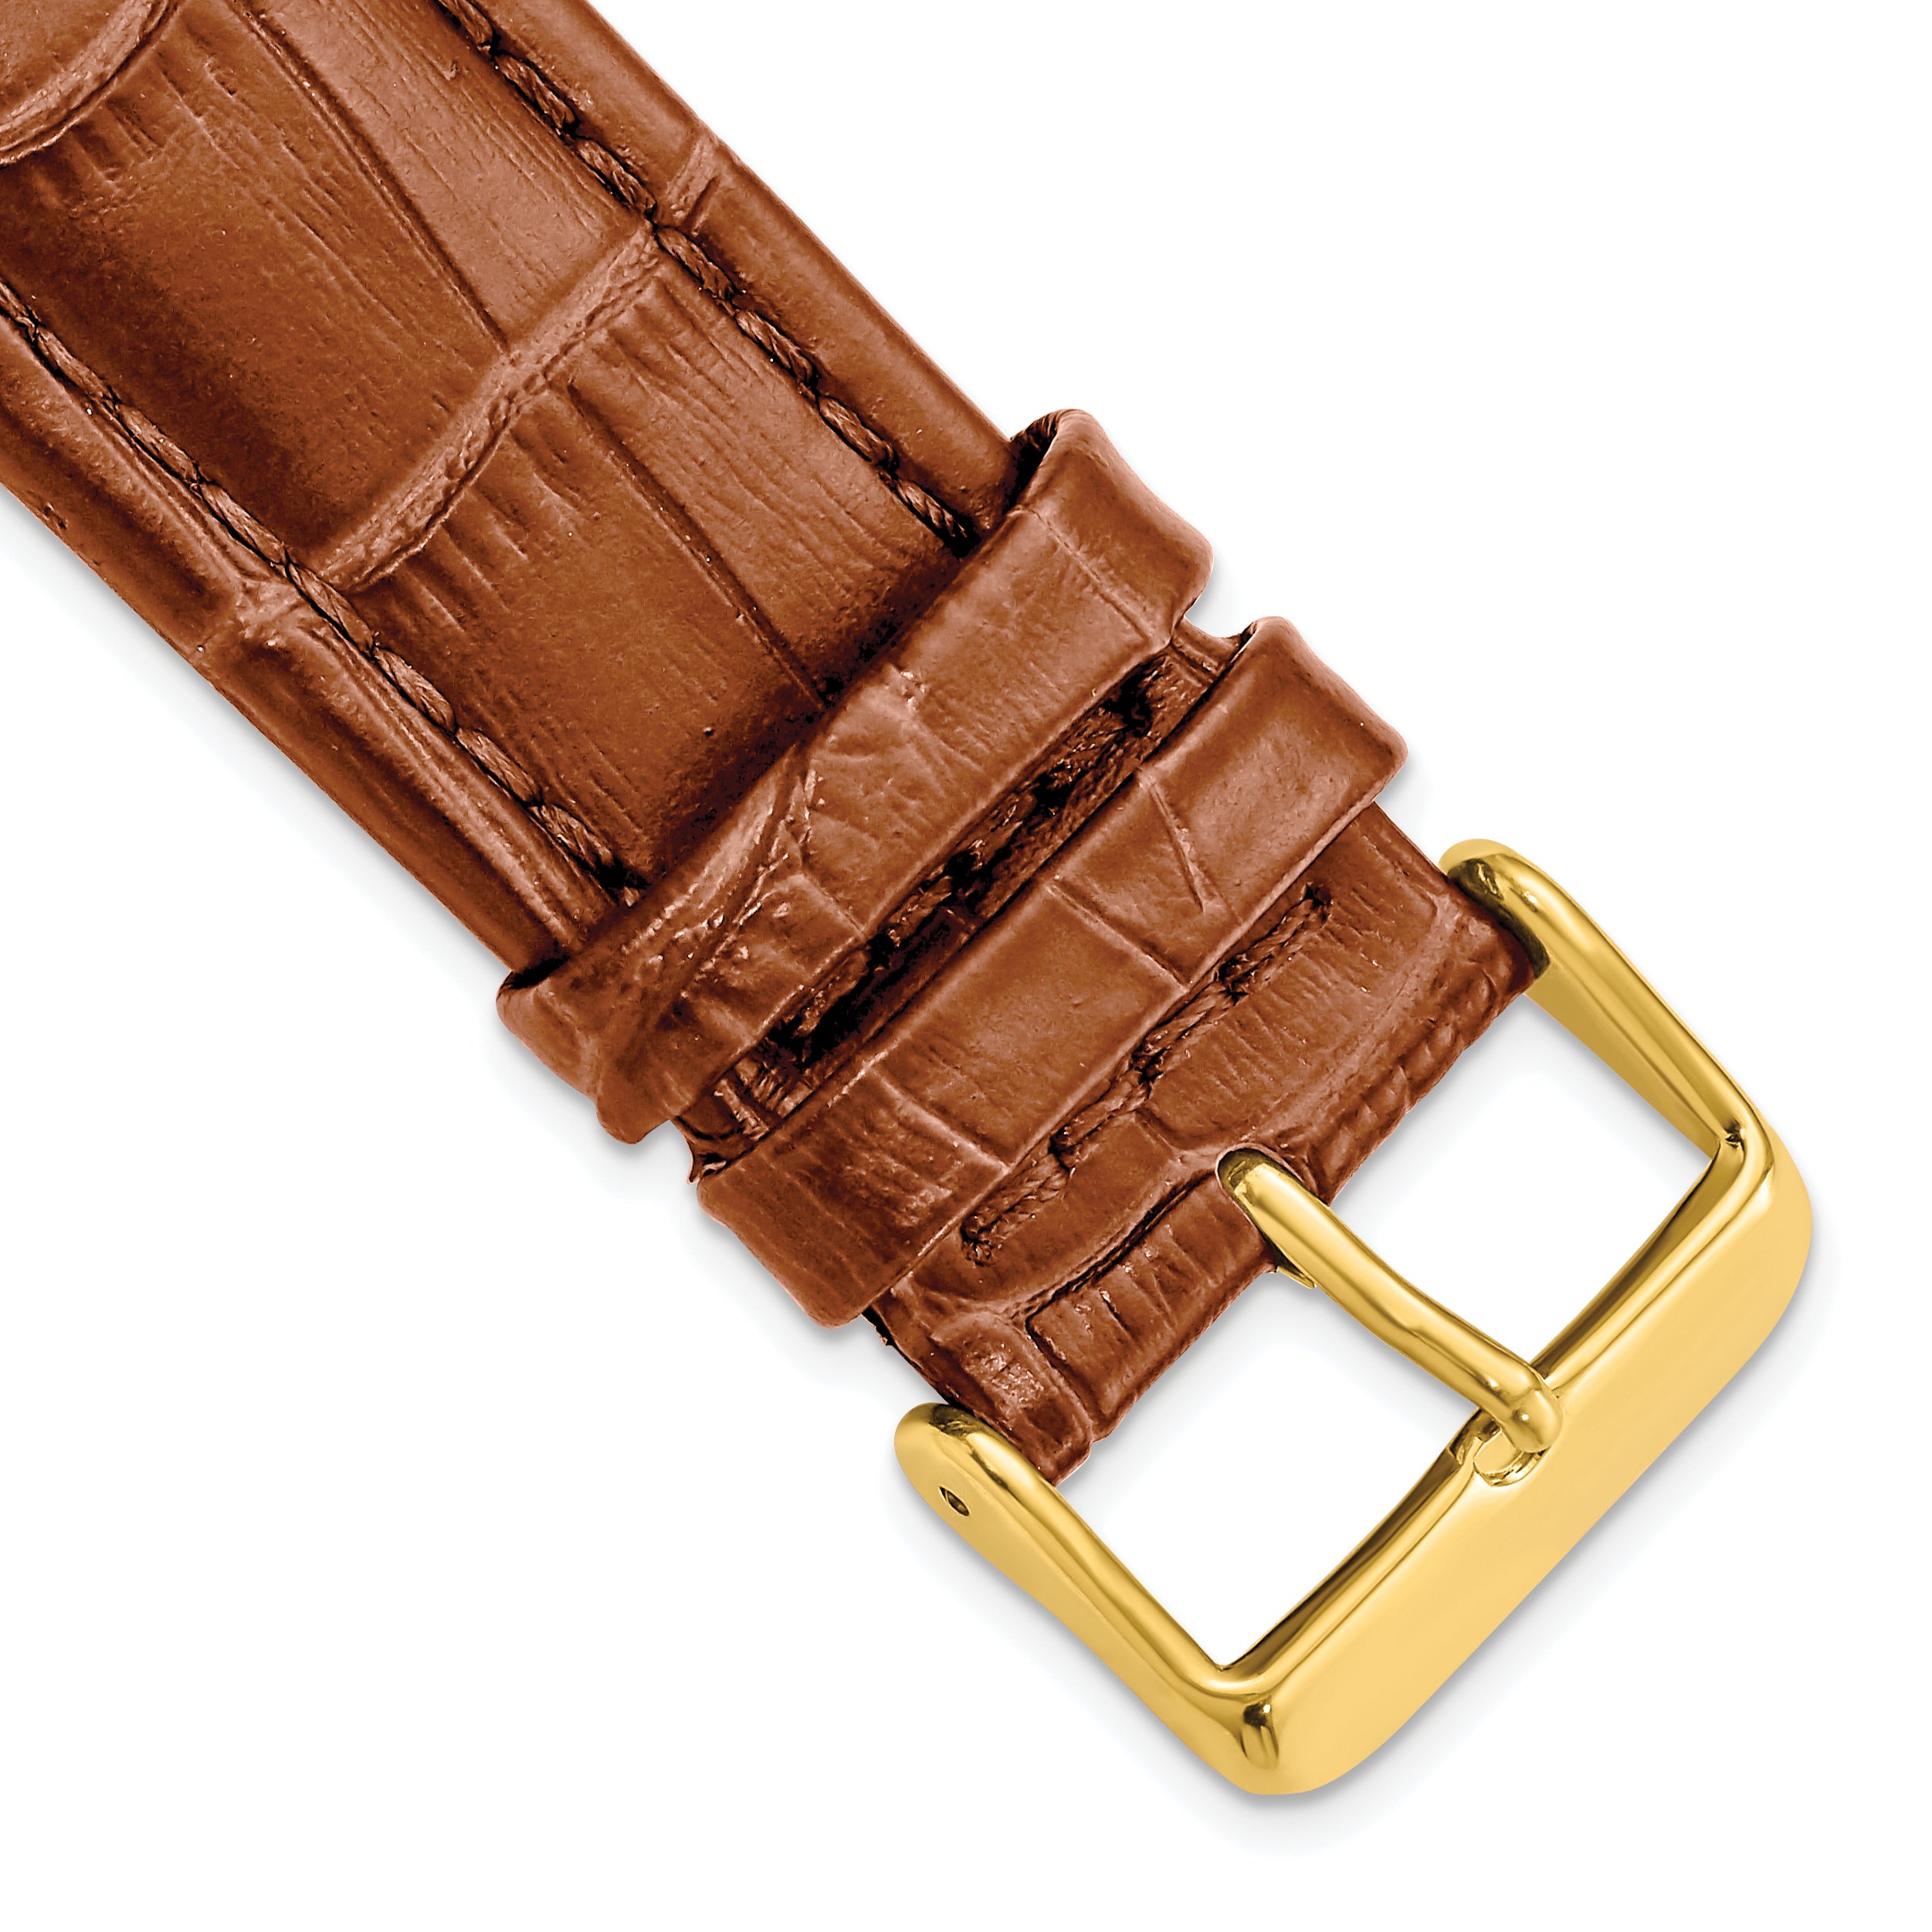 DeBeer 24mm Havana Matte Alligator Grain Leather with Gold-tone Buckle 7.5 inch Watch Band